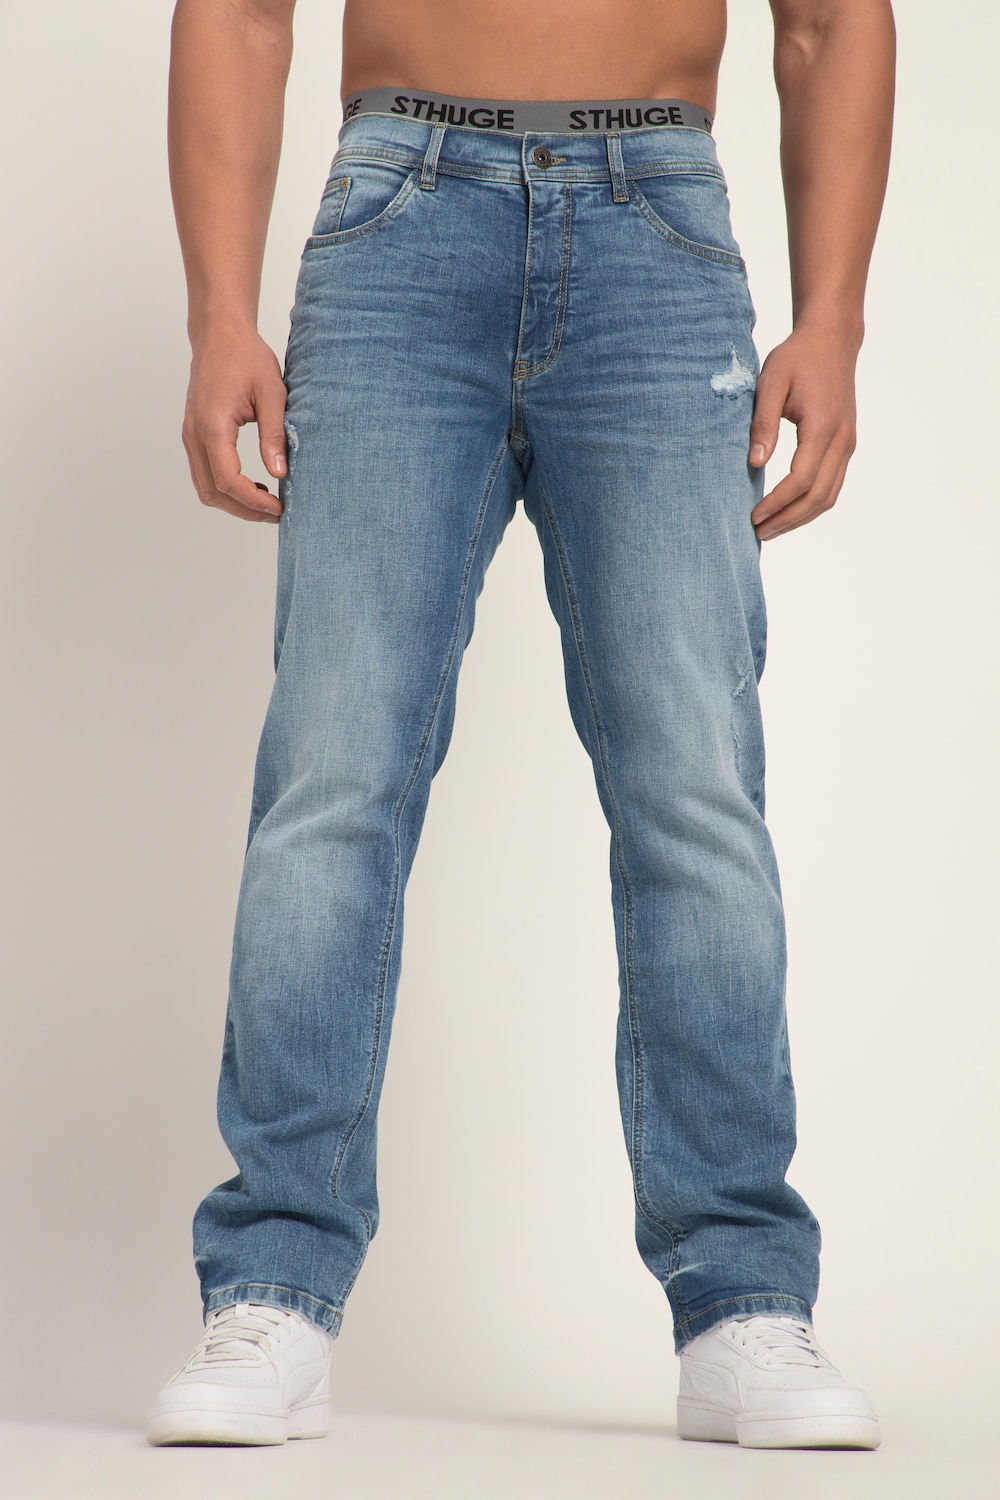 grandes tailles jean sthuge flexlastic®, femmes, bleu, taille: 60, coton, sthuge